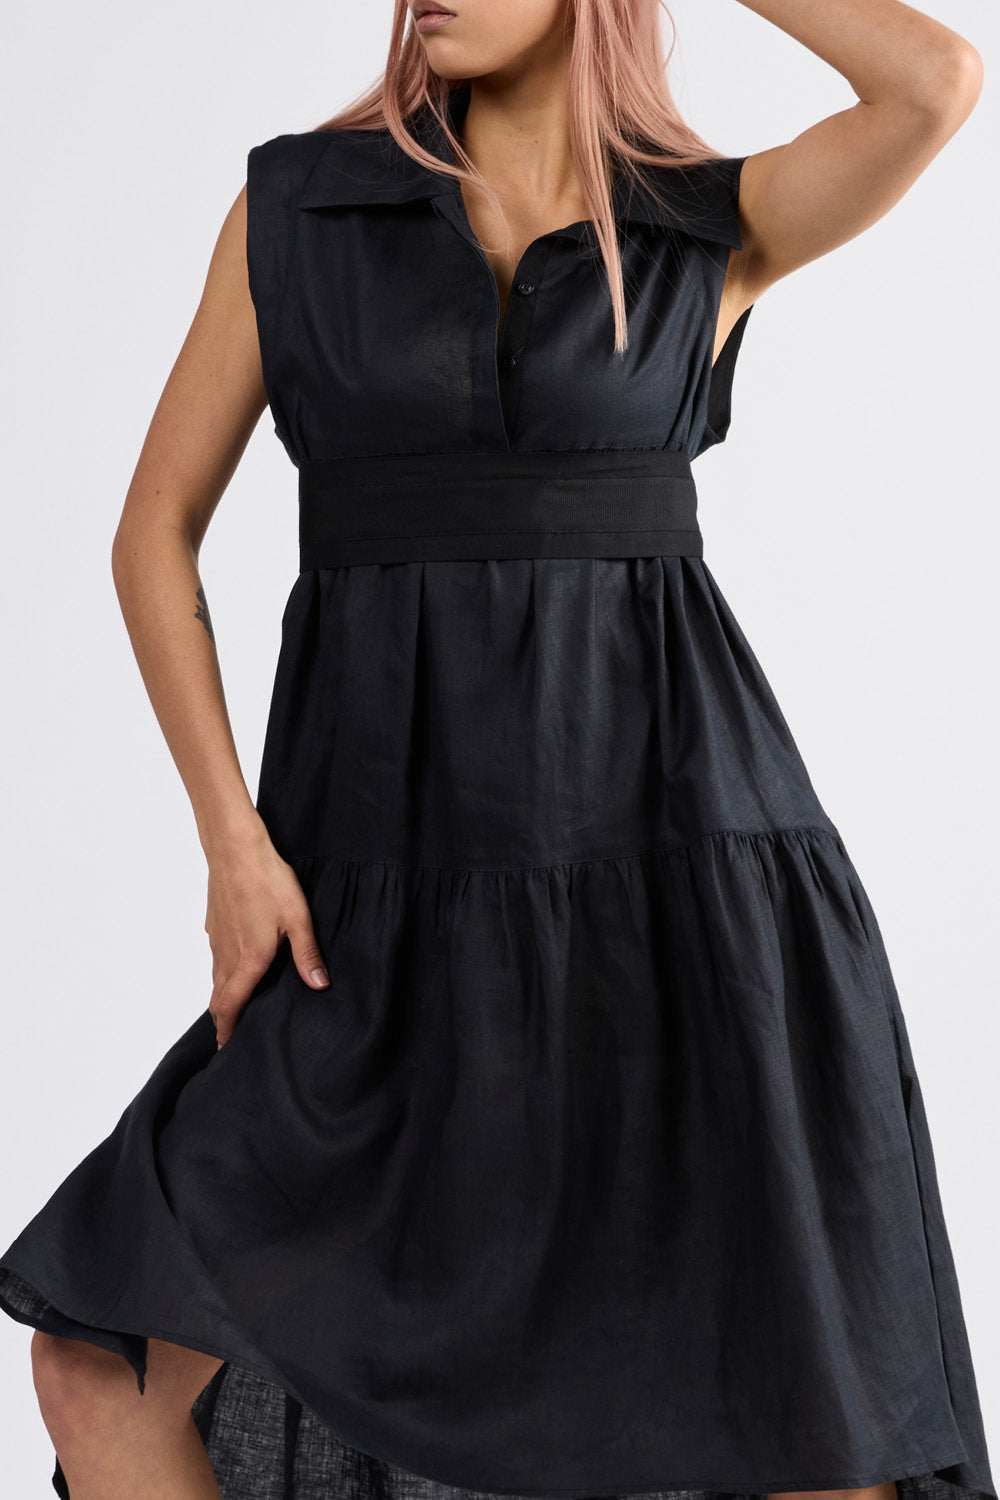 Campari Dress - Black